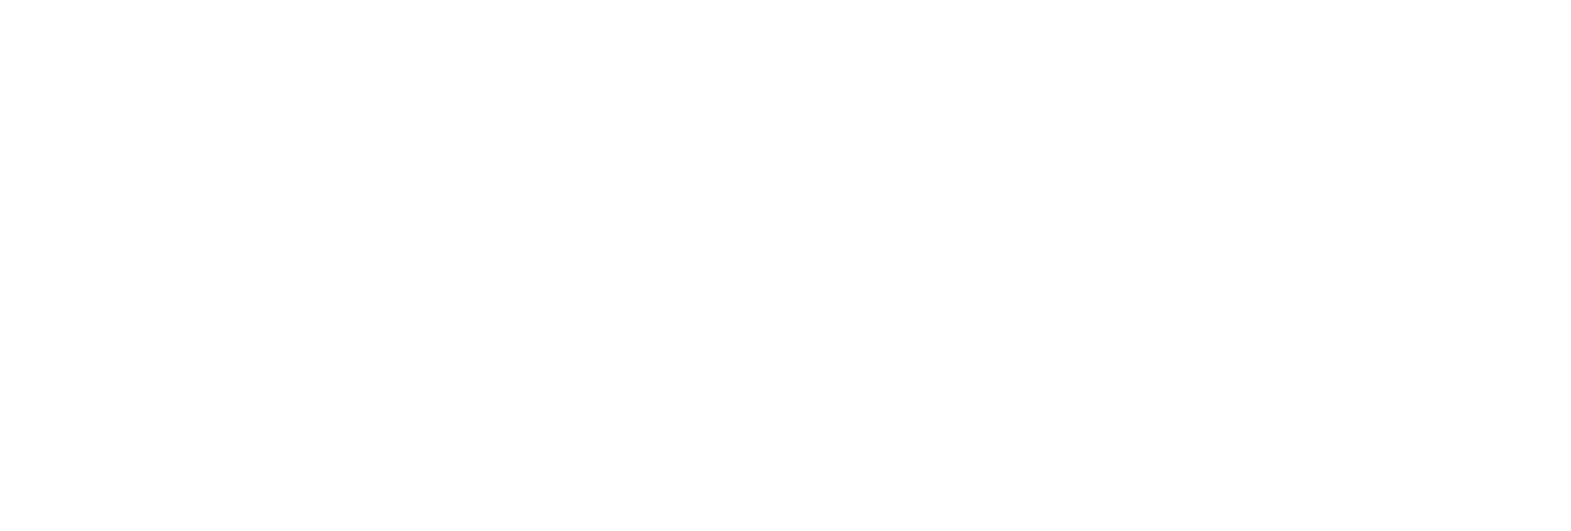 Universal Robina Corporation logo large for dark backgrounds (transparent PNG)